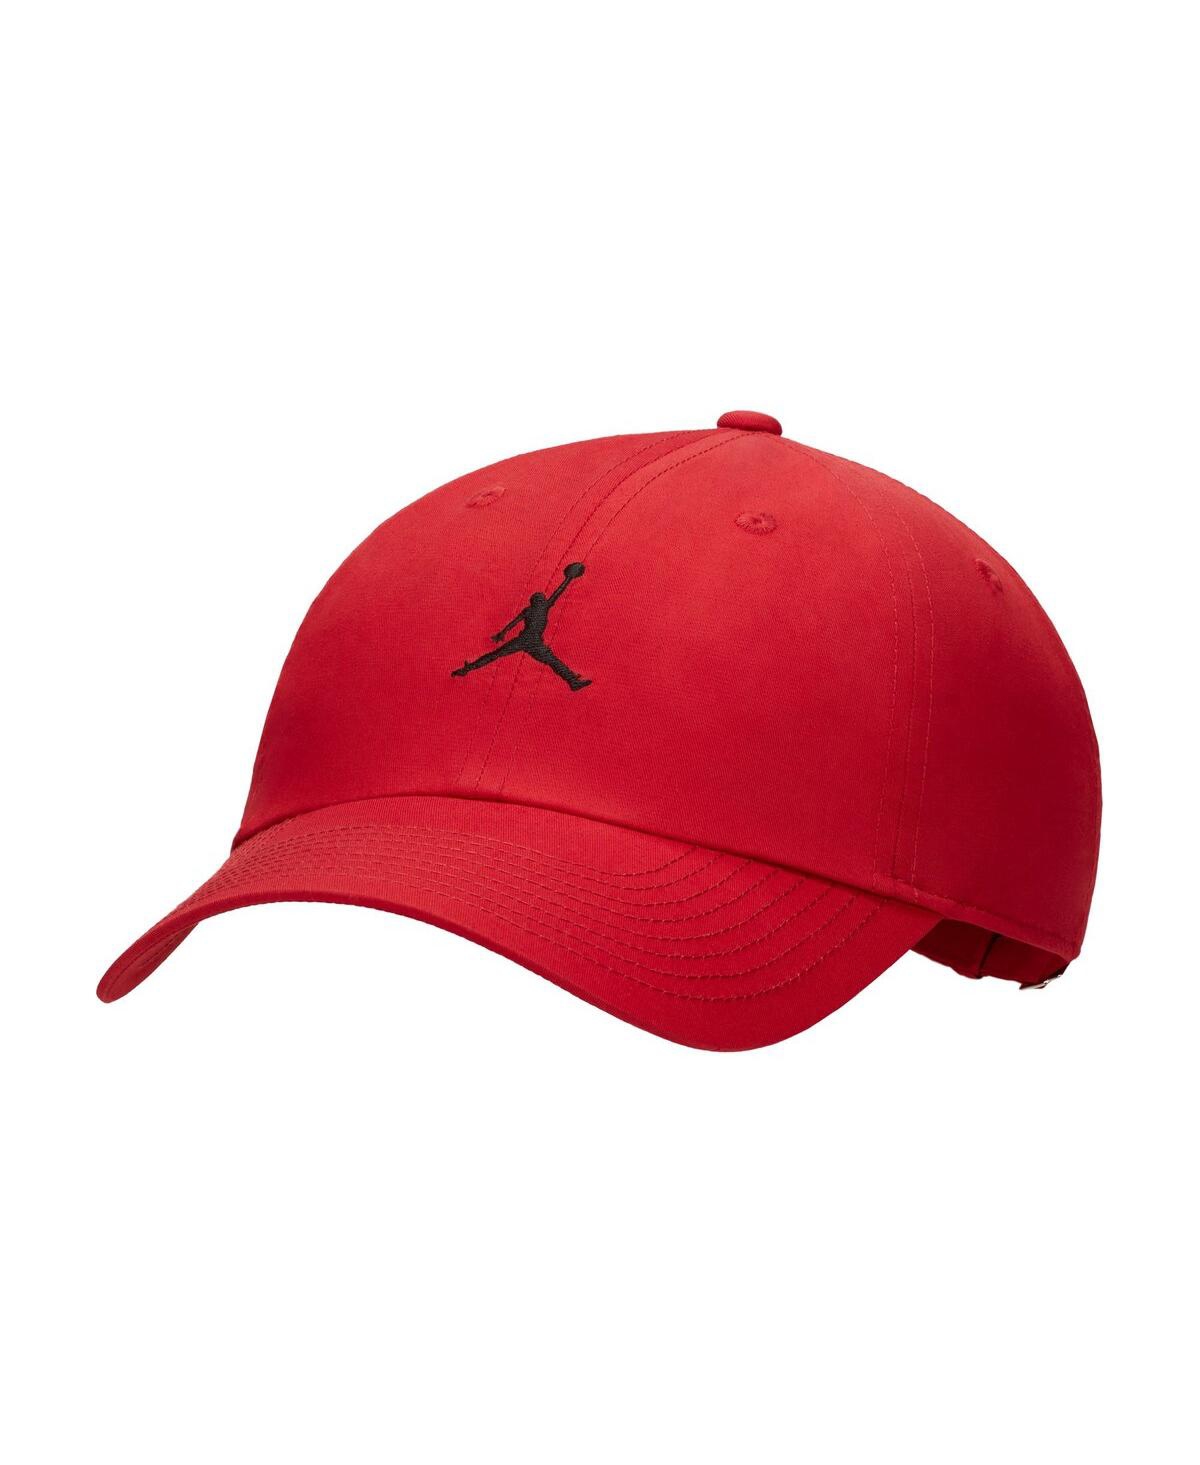 Men's Jordan Red Jumpman Club Adjustable Hat - Red